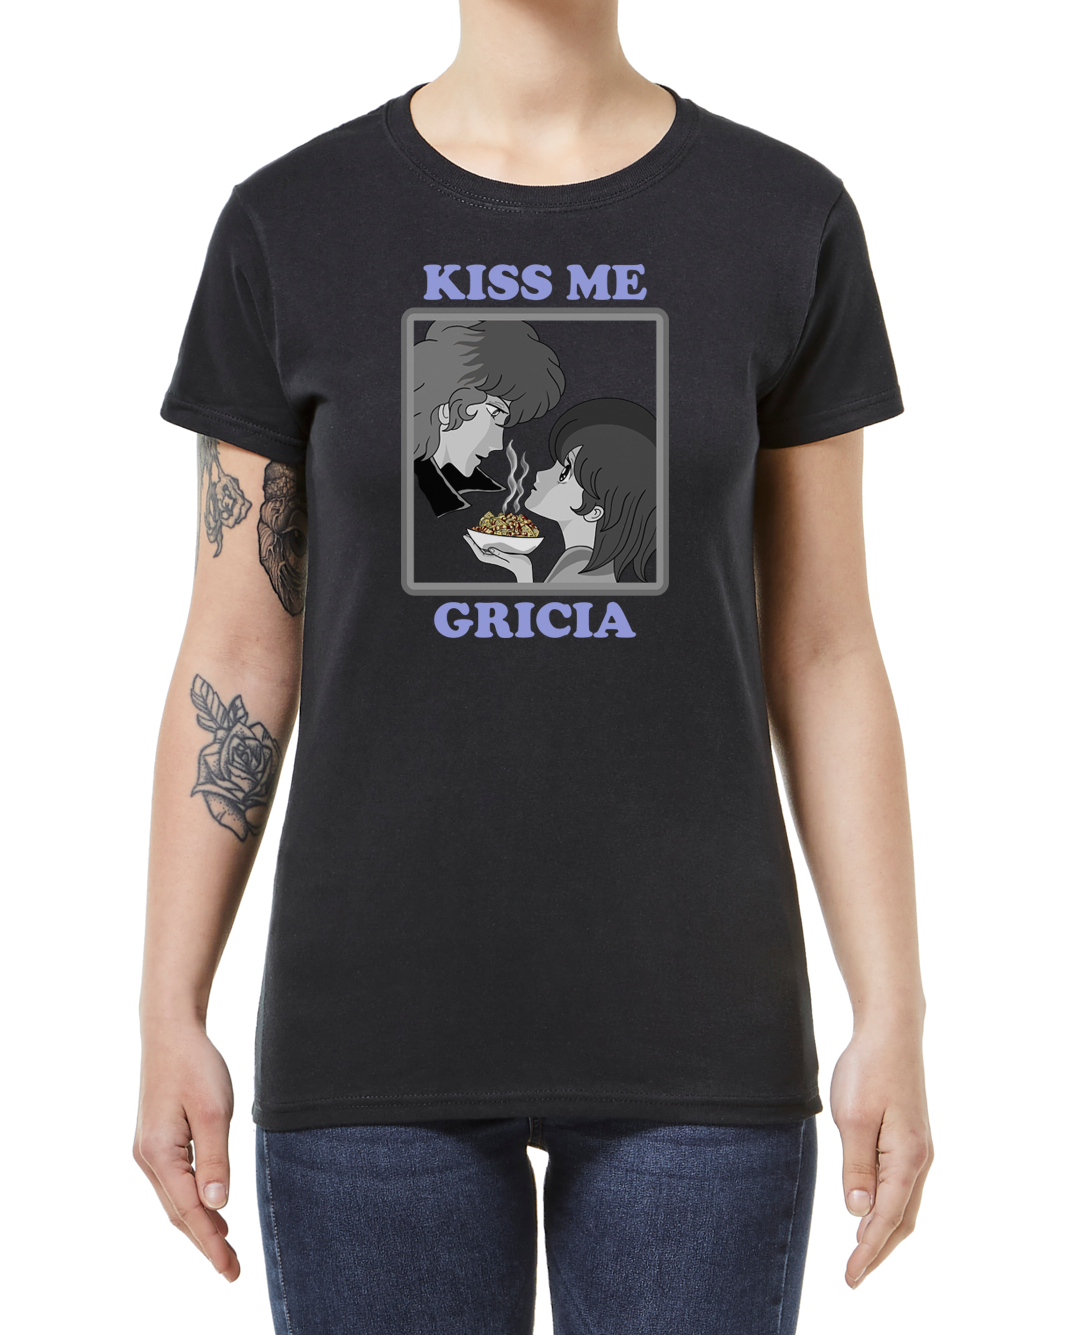 Kiss me Gricia black